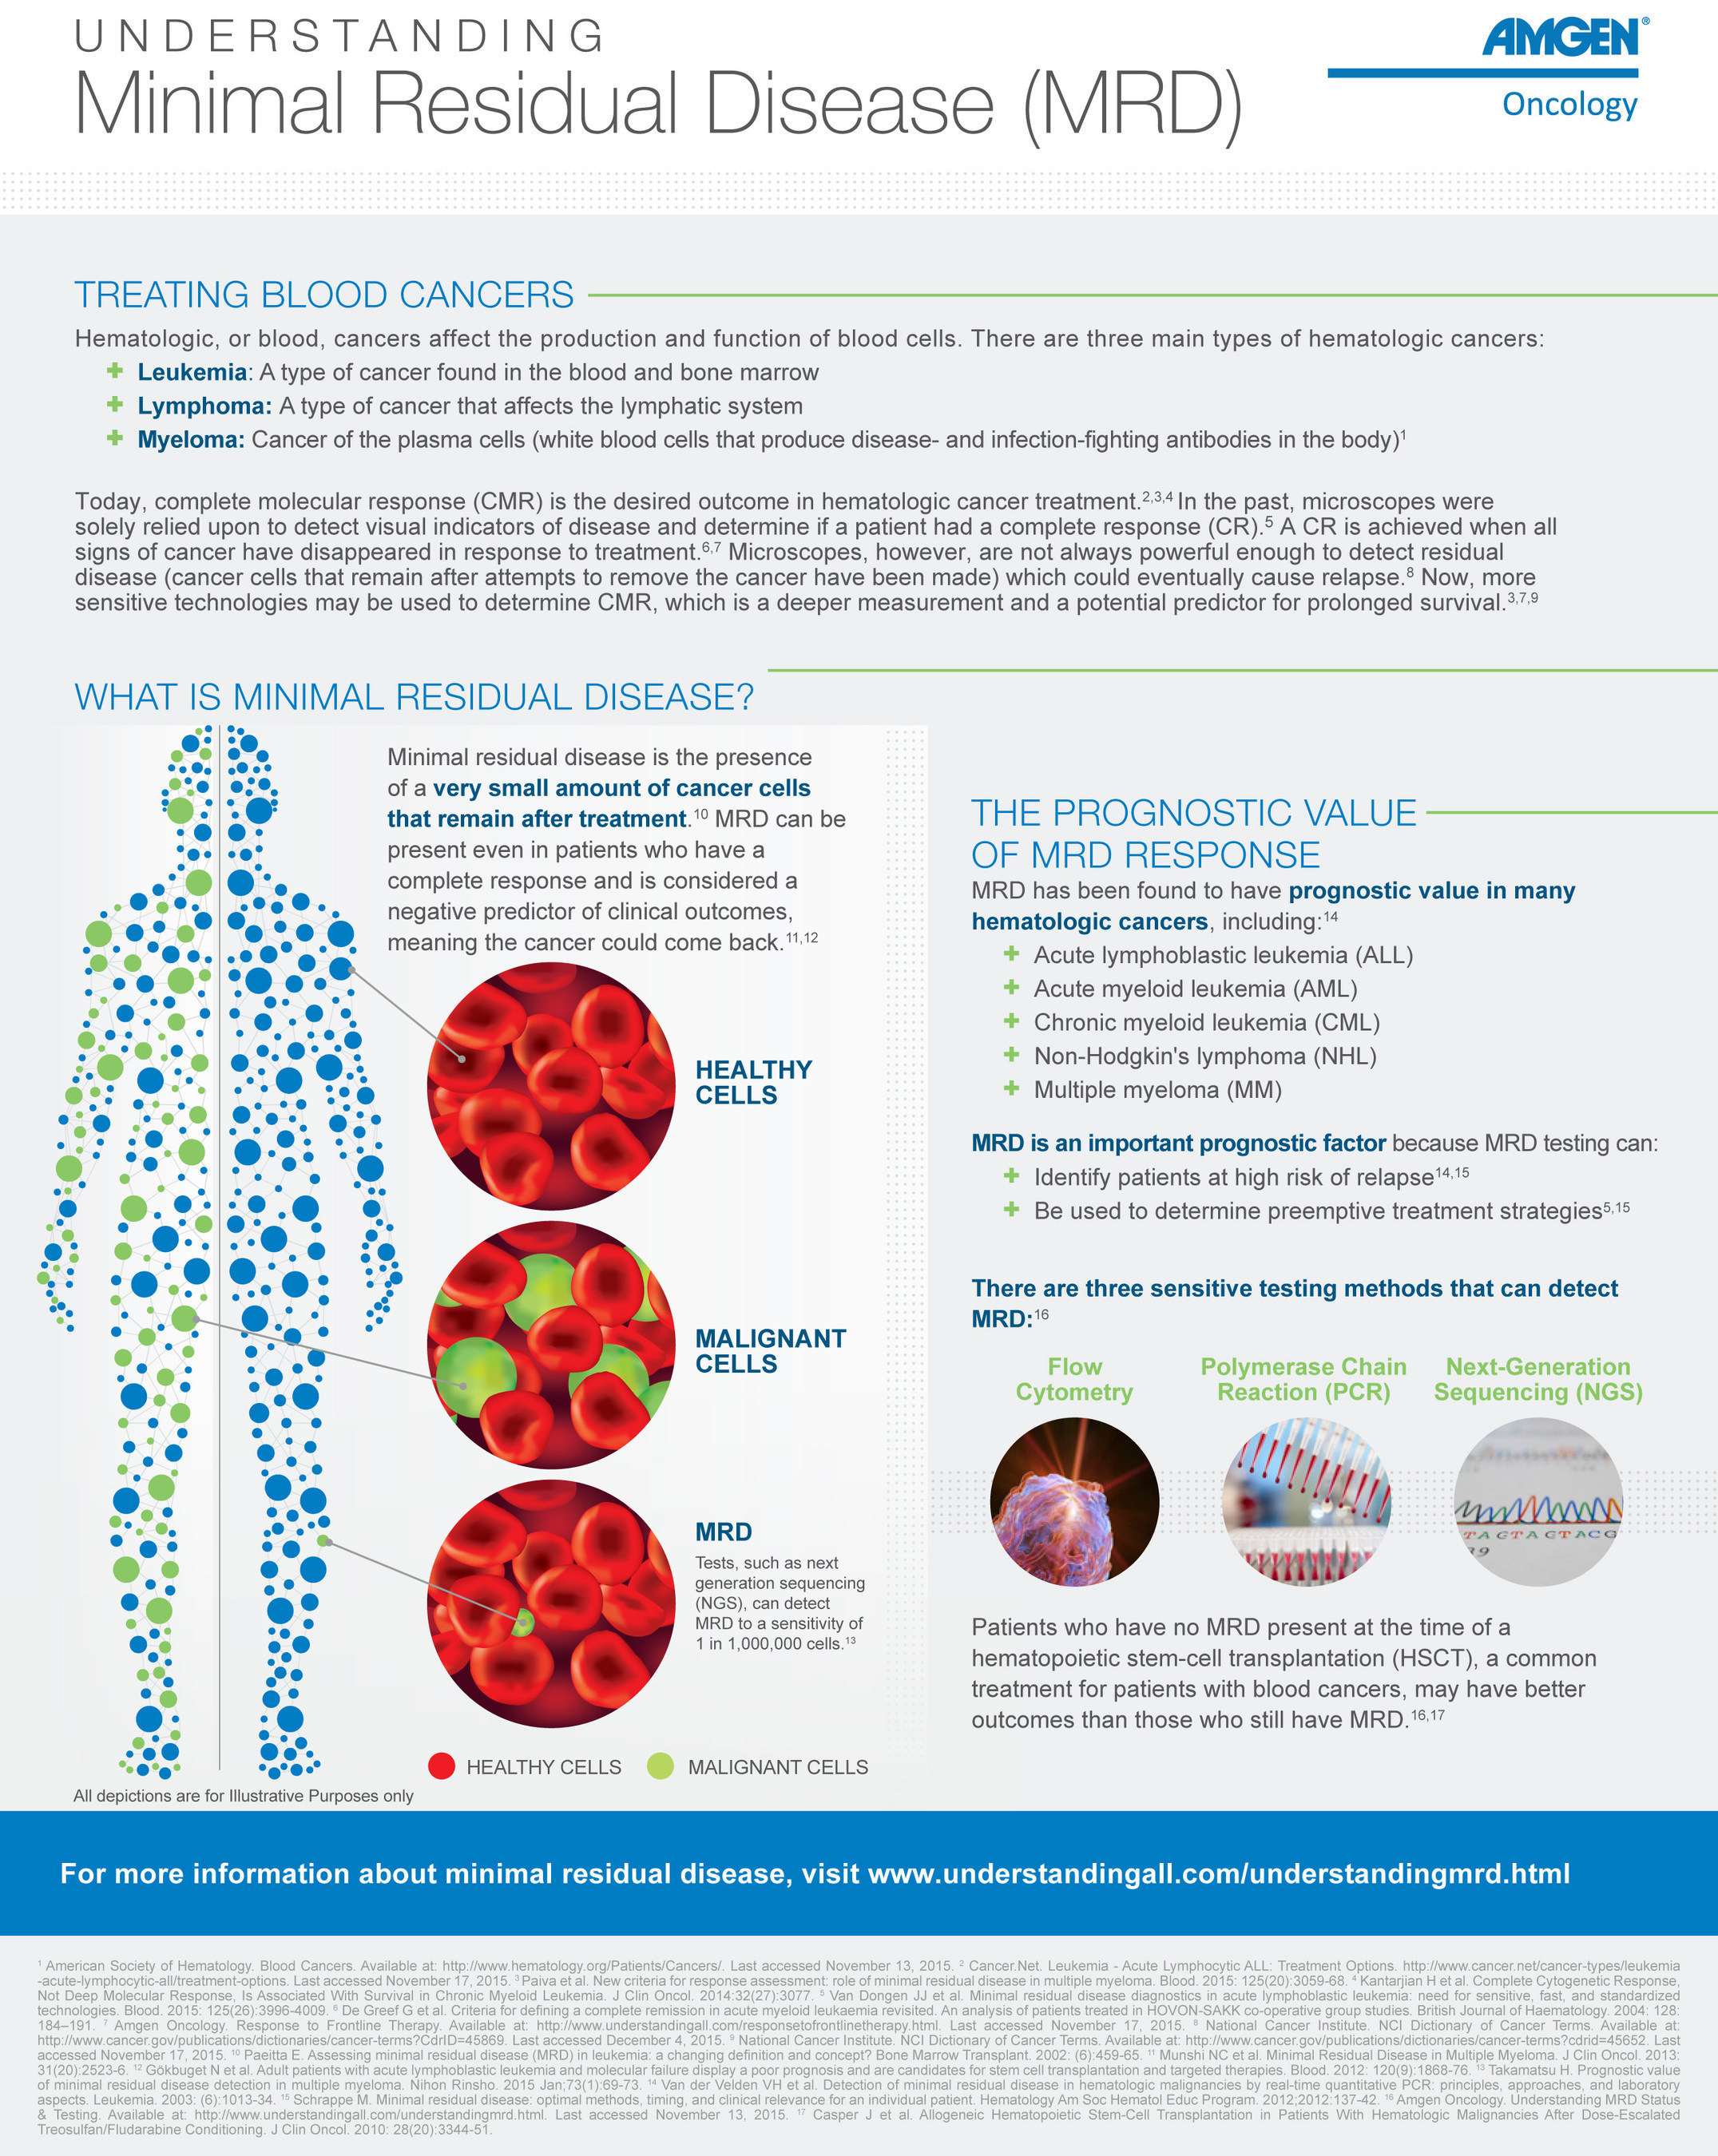 Infographic - Understanding Minimal Residual Disease (MRD)